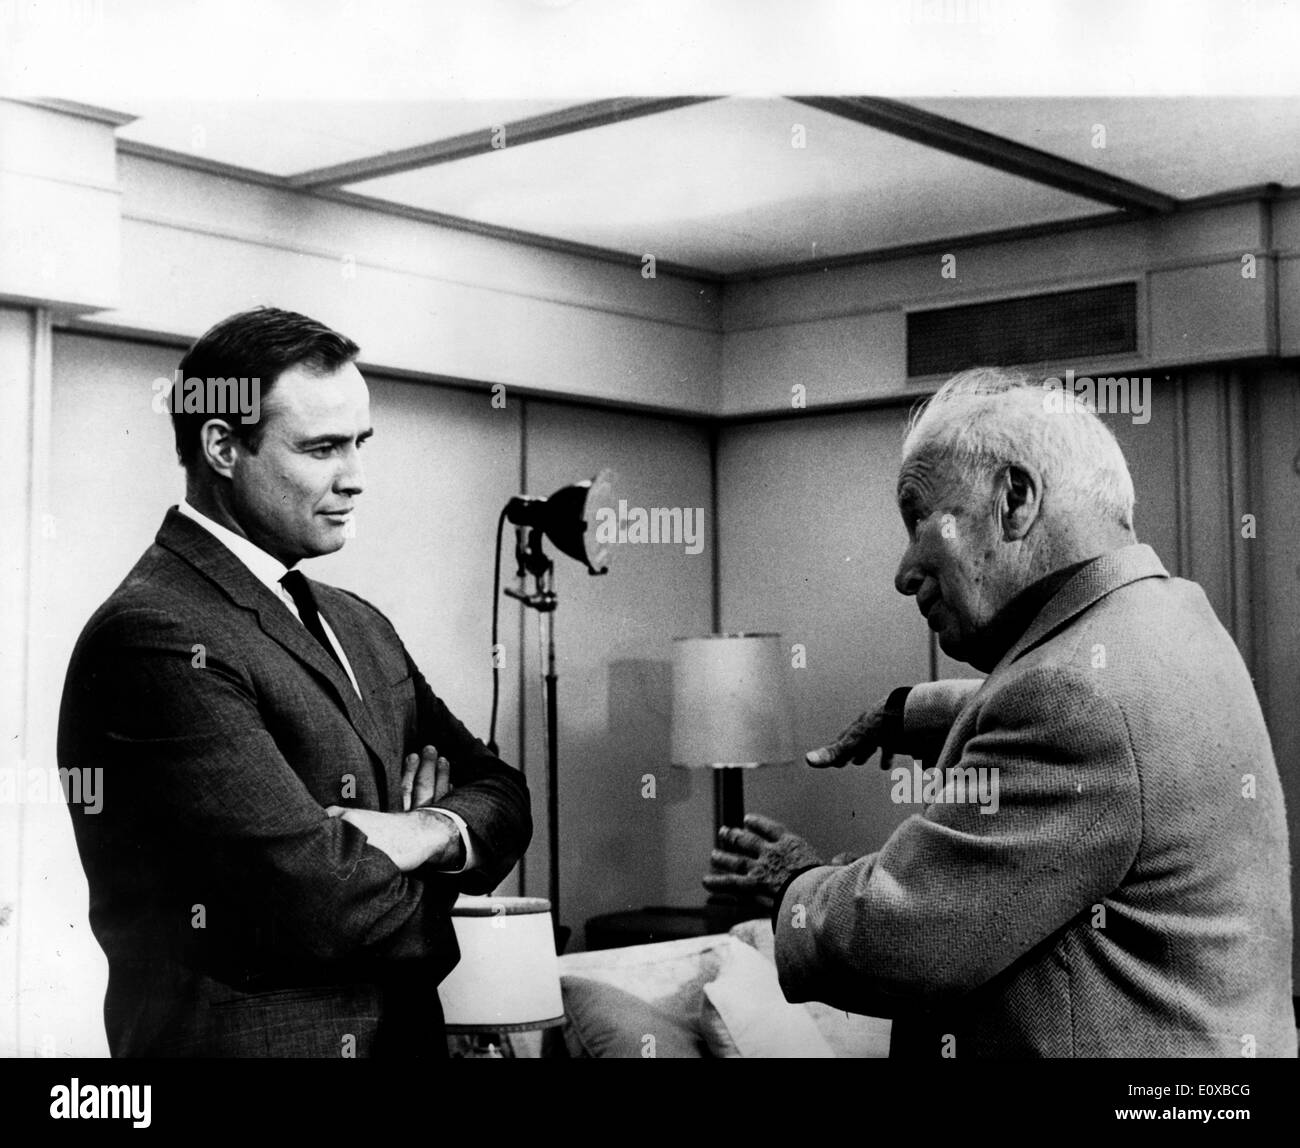 Marlon Brando talking to director Charlie Chaplin on set Stock Photo